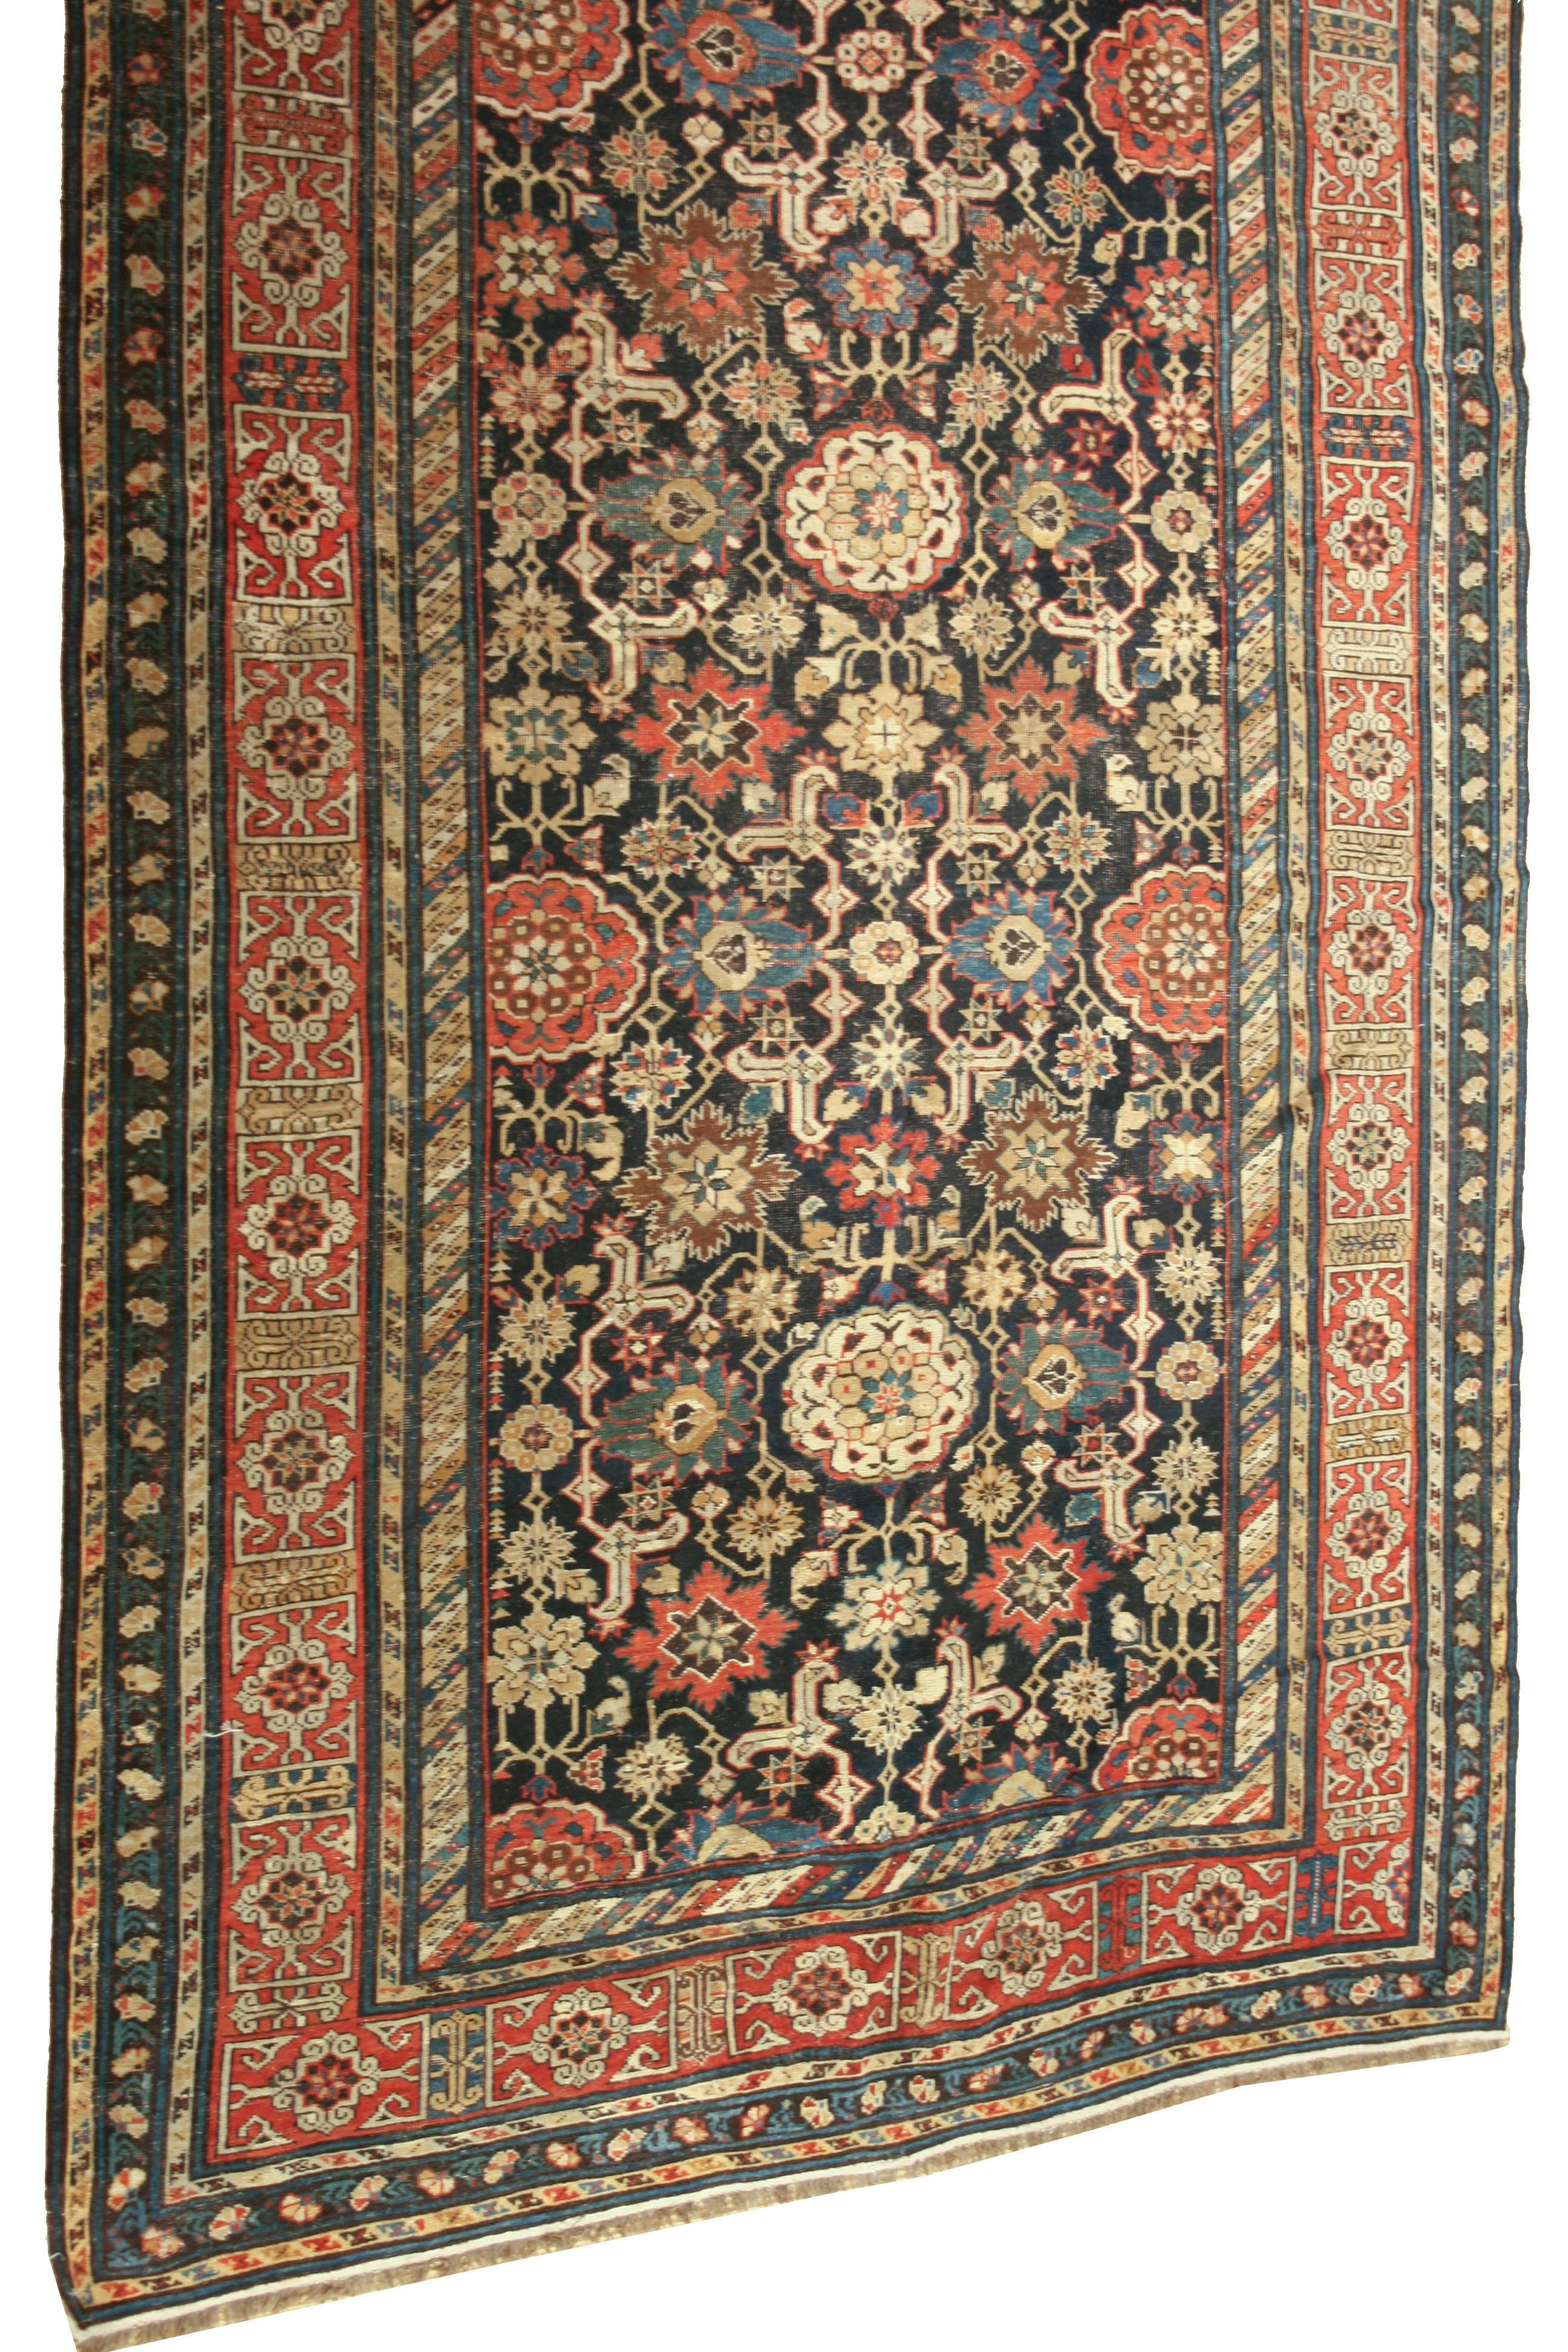 Antique Caucasian Kuba Shirvan Runner Rug, 4'11 x 12'11. 19th century Shirvan runner rug. Colors: Navy, coral, tan, teal and royal blue.